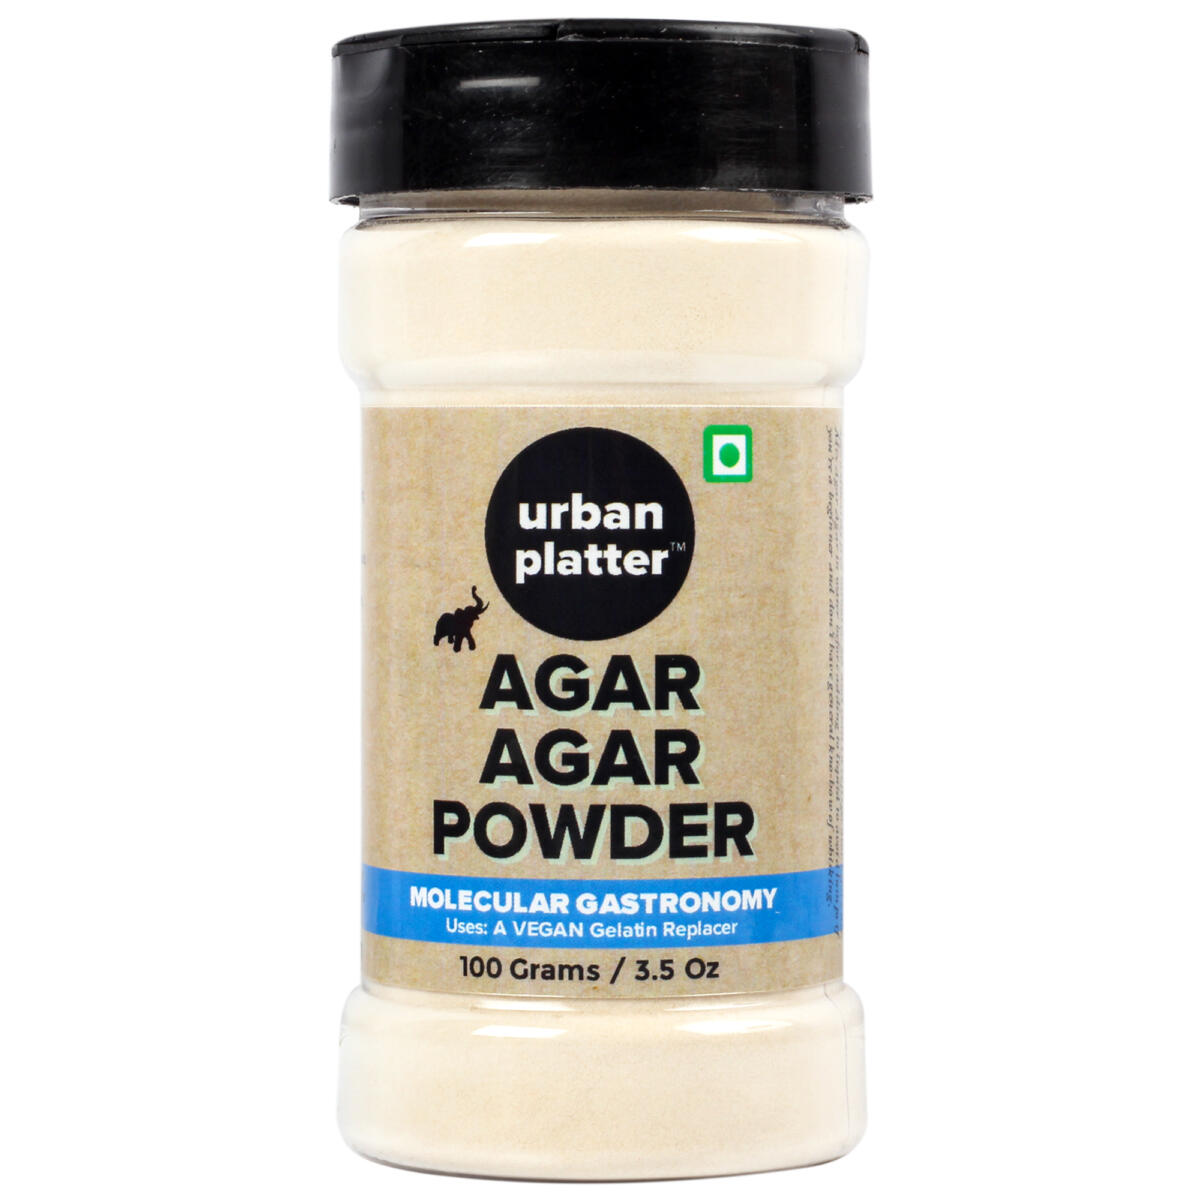 Urban Platter Agar Agar Powder, 100g [Vegetarian Gelatin